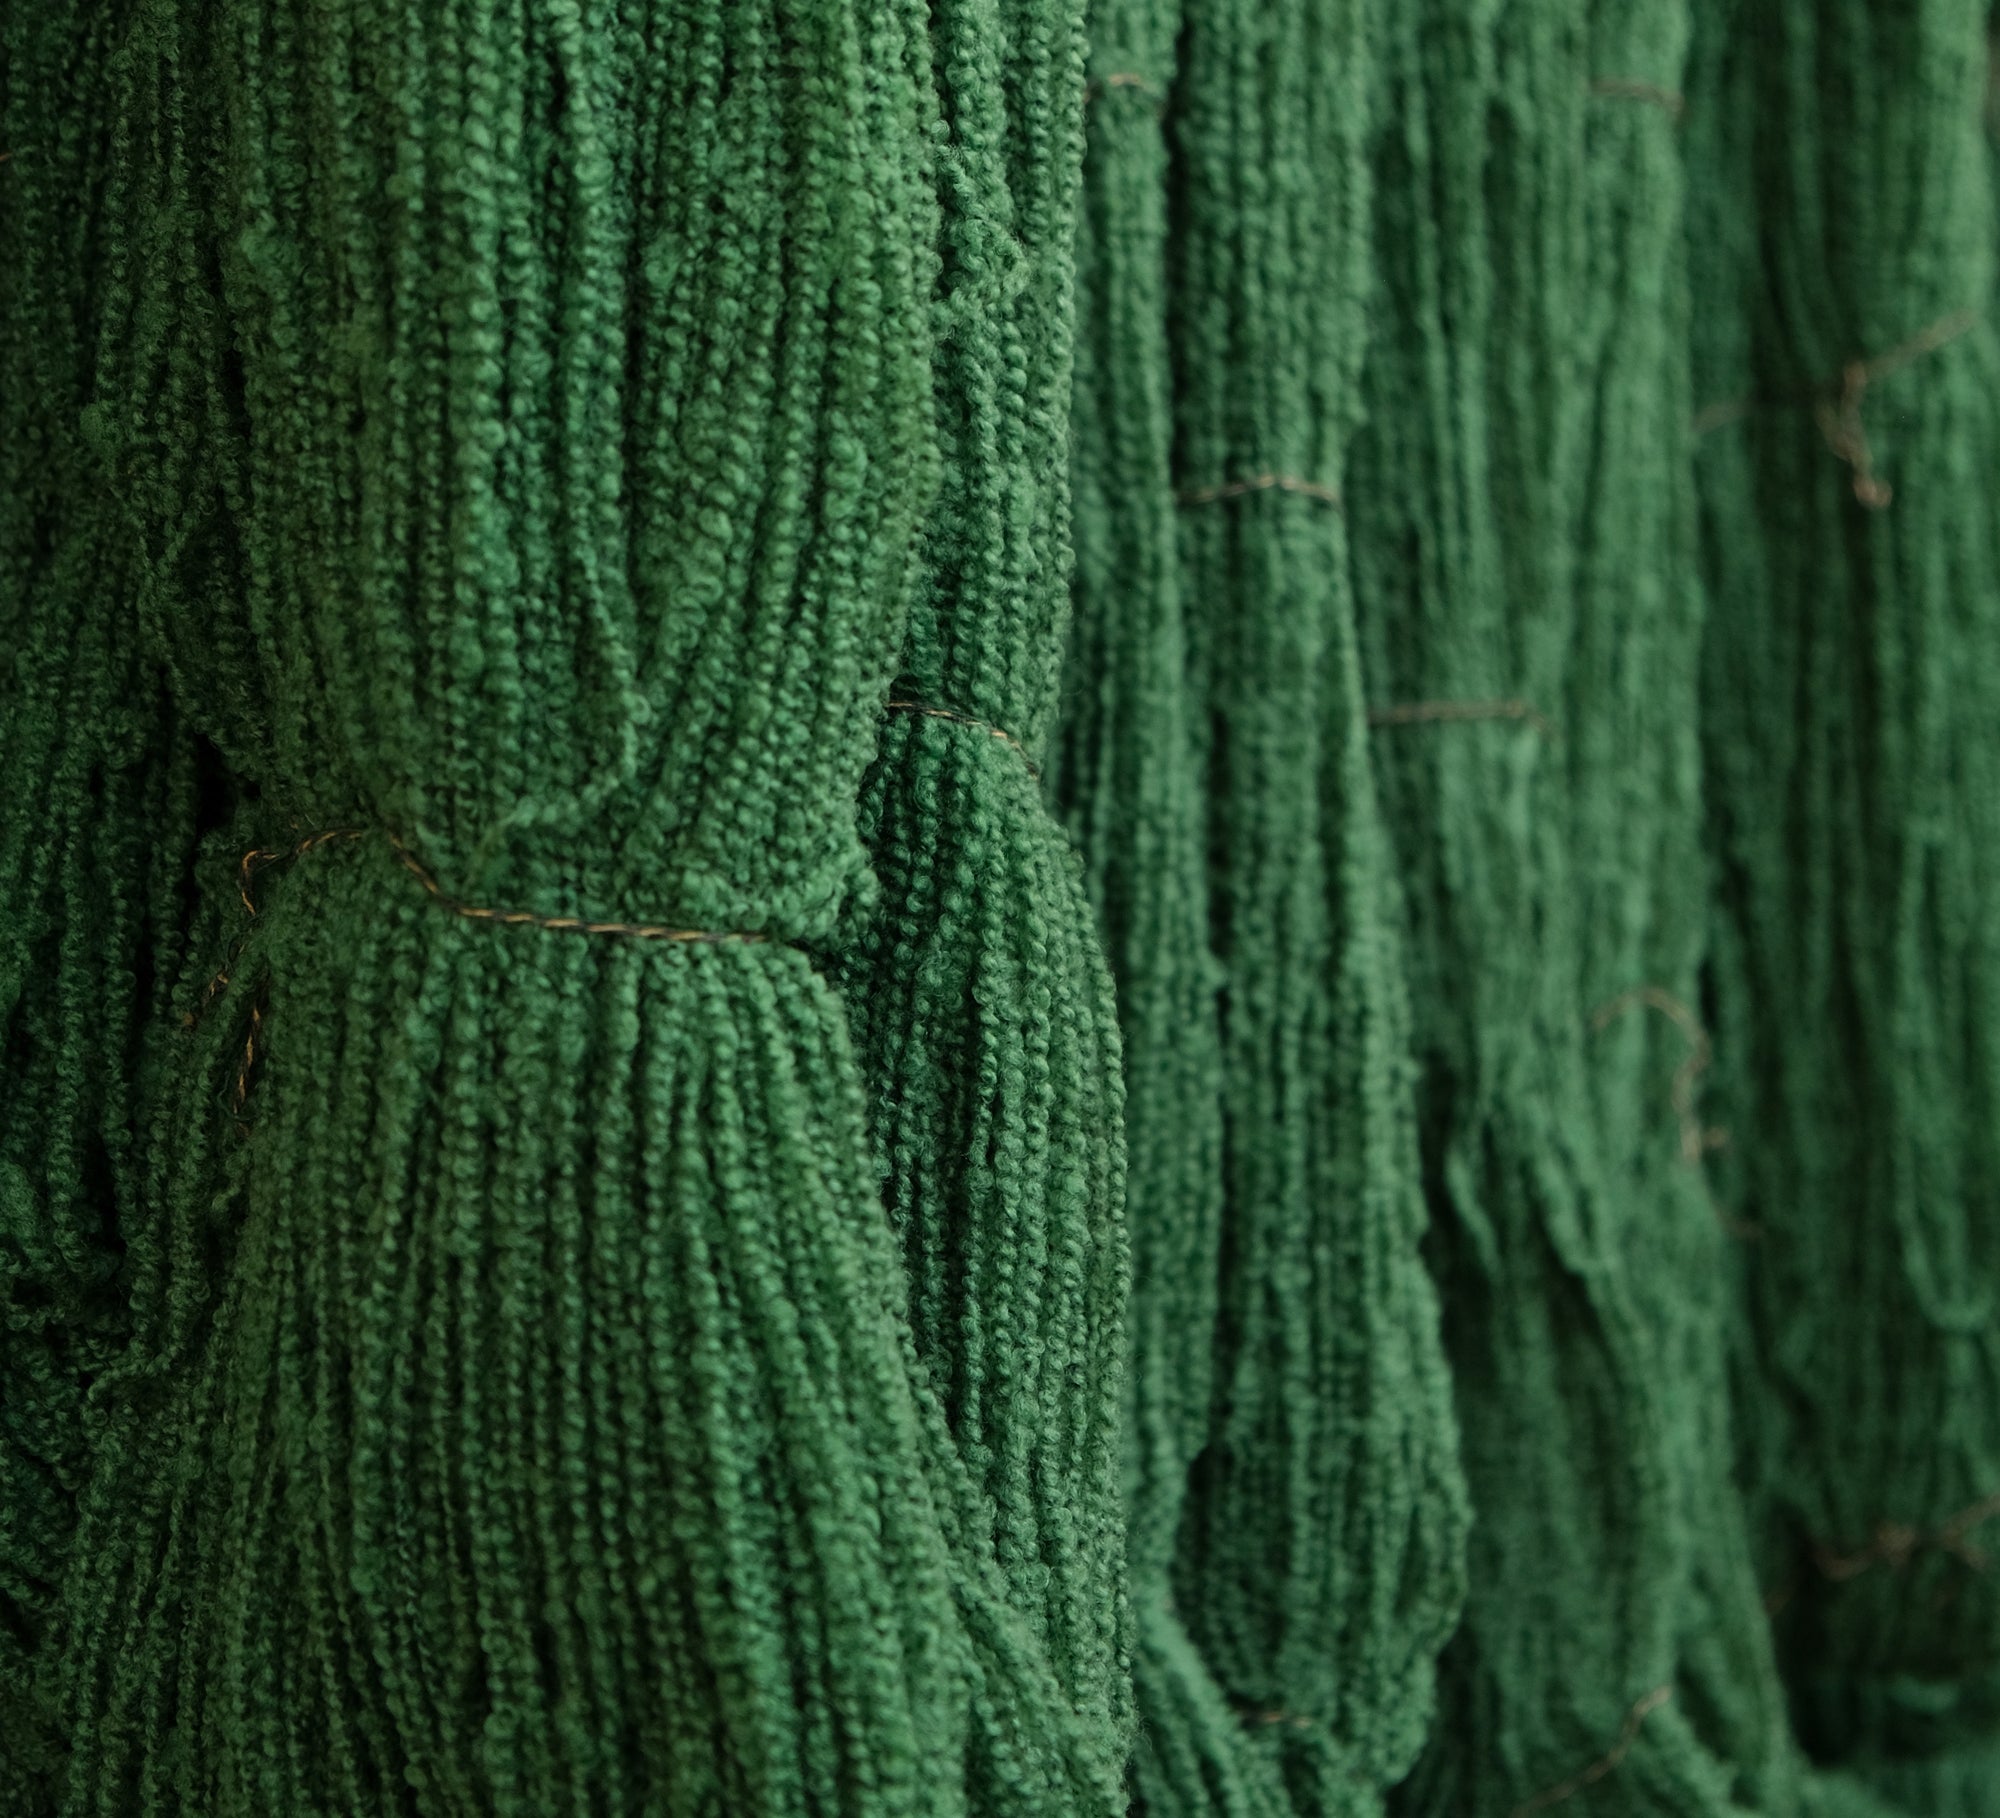 Cooper's cormo boucle yarn in artichoke green, drying.